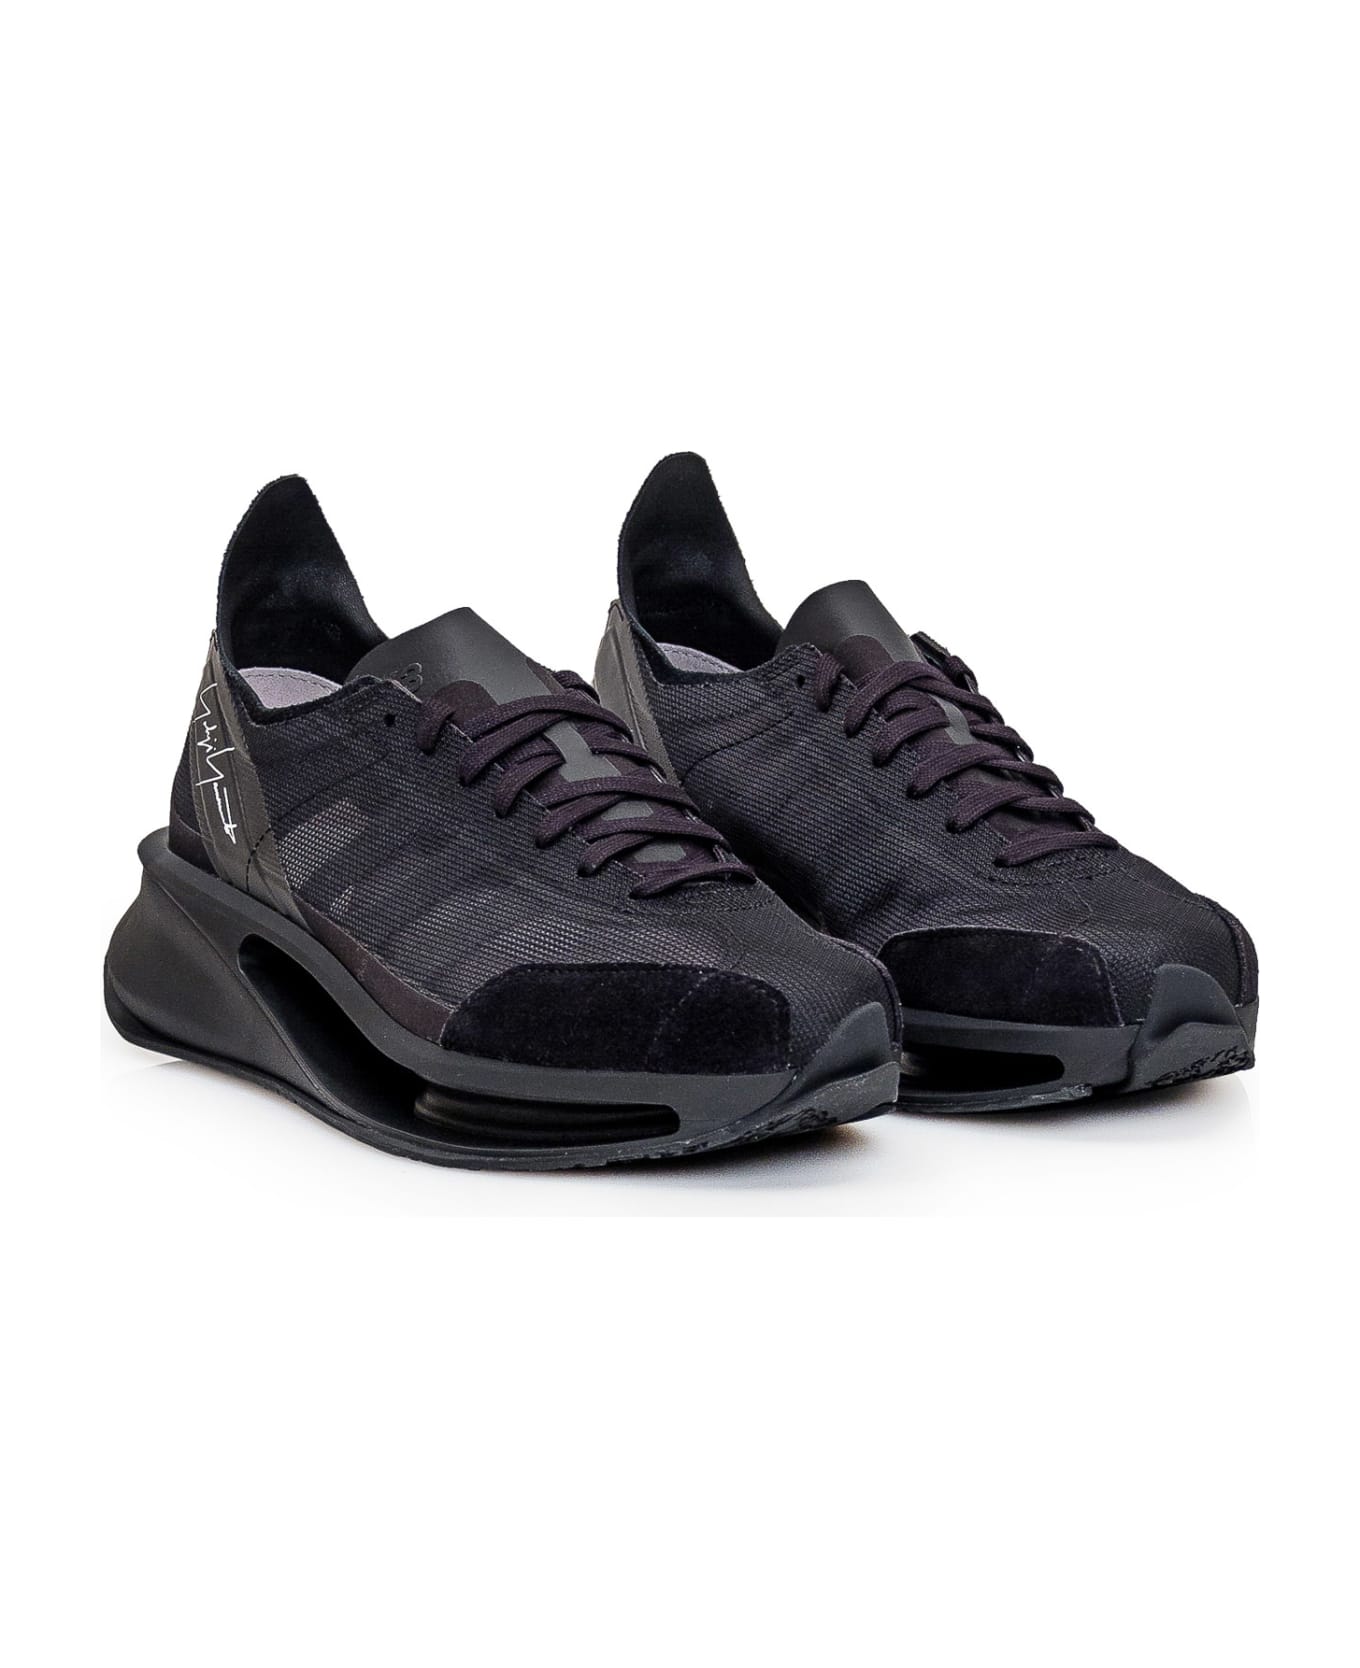 Y-3 Gendo Run Sneaker - BLACK/BLACK/BLACK